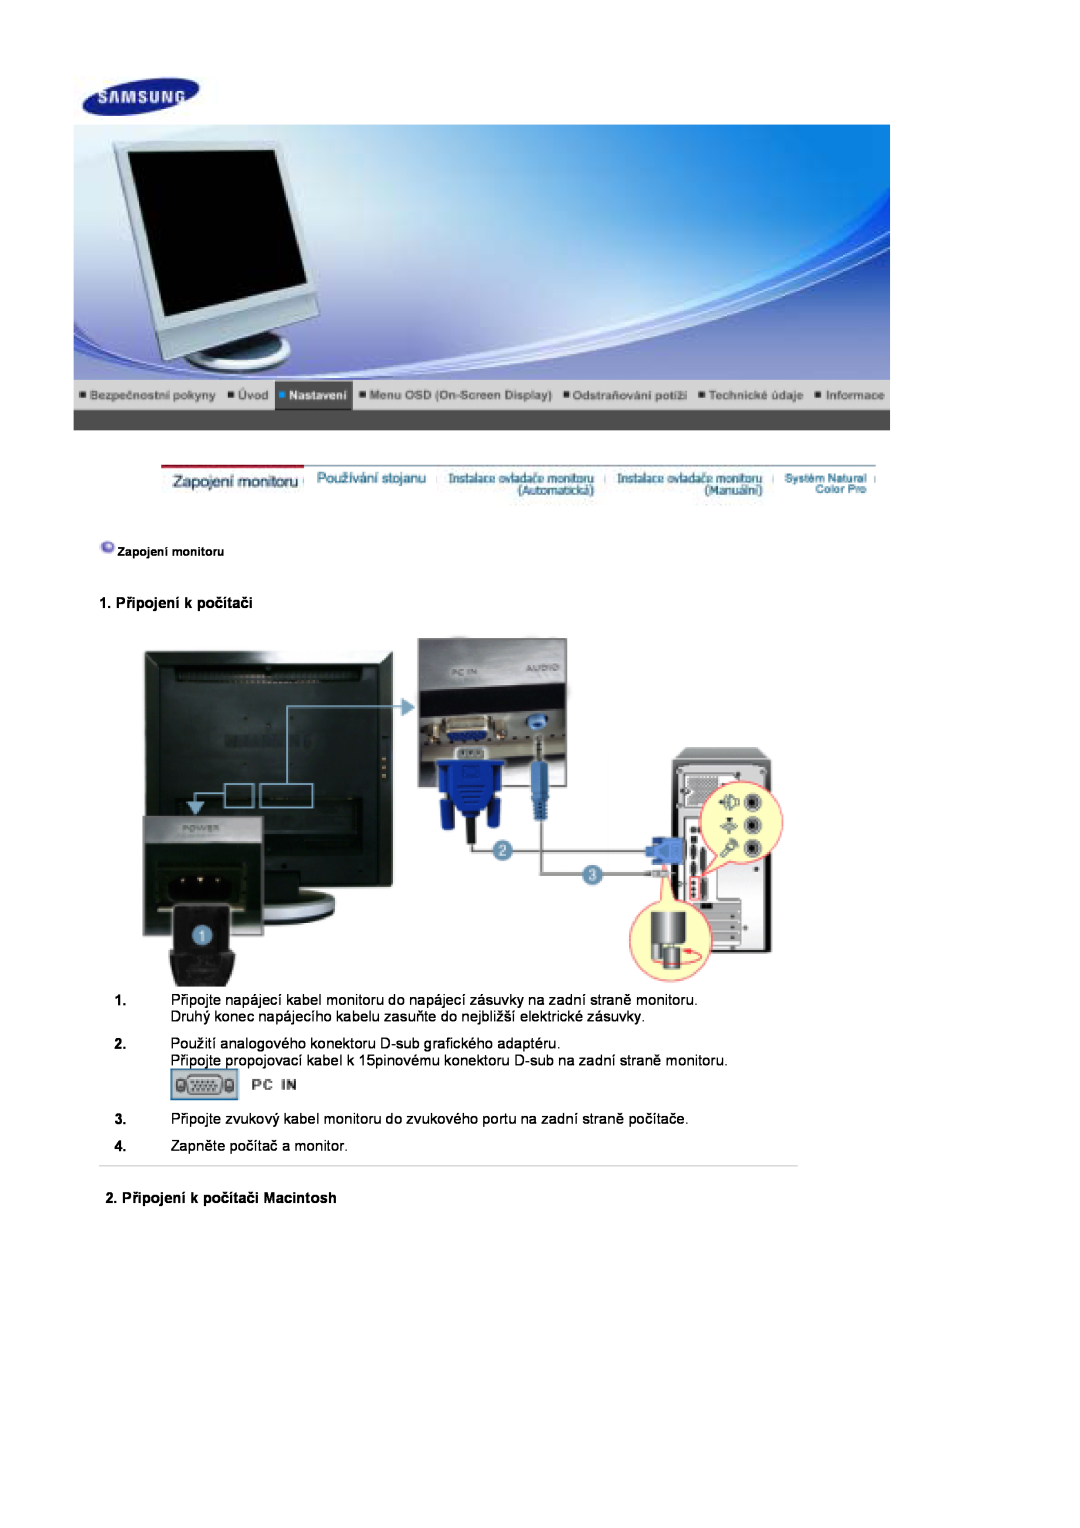 Samsung LS17DOASS/EDC, LS19DOASS/EDC manual 1. Připojení k počítači, 2. Připojení k počítači Macintosh 